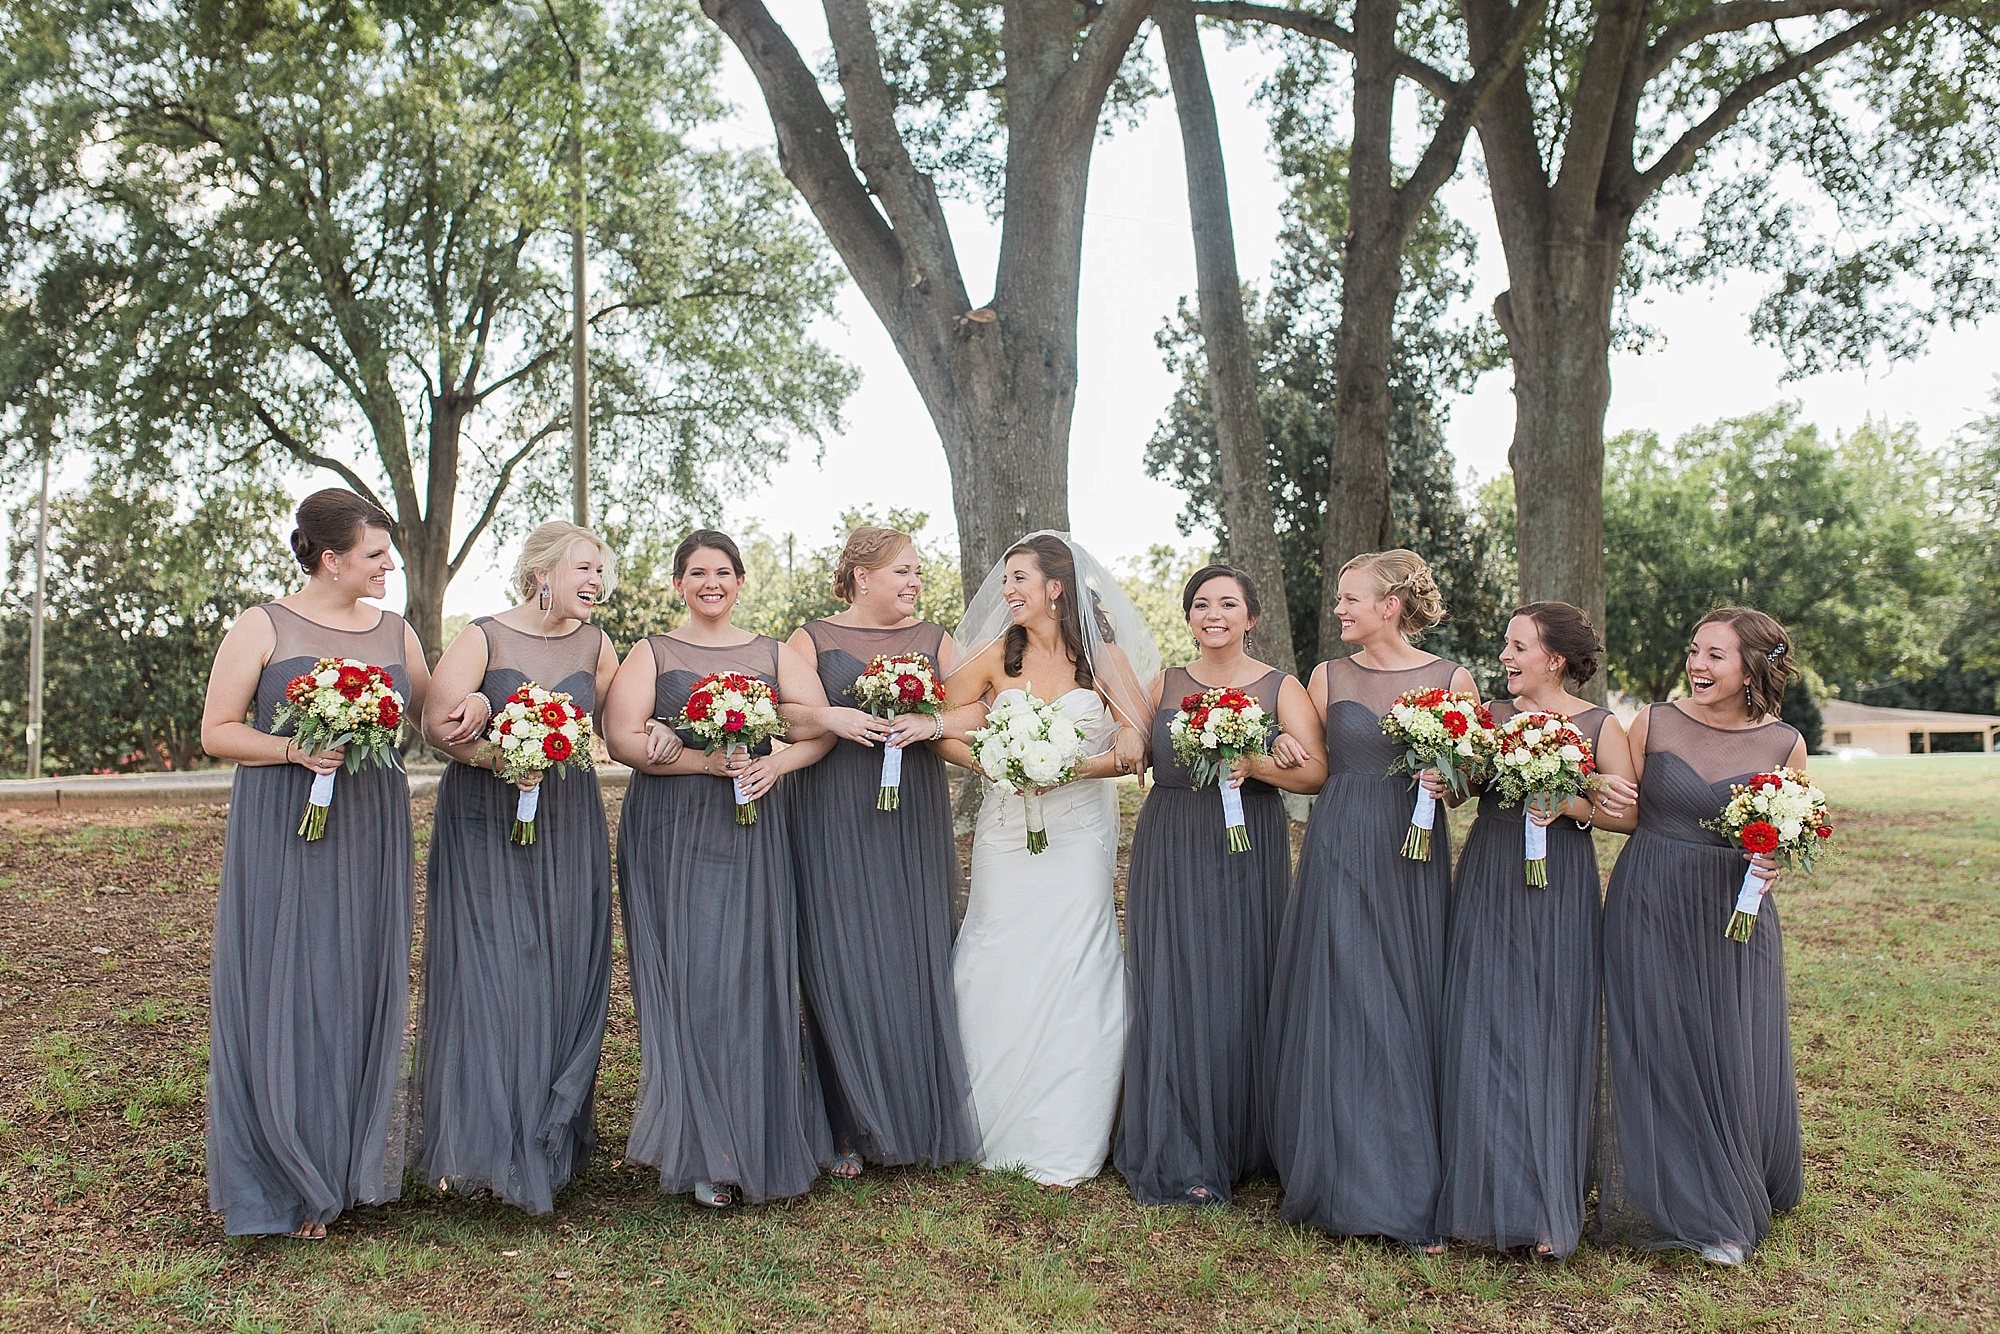 Gray bridesmaids dresses